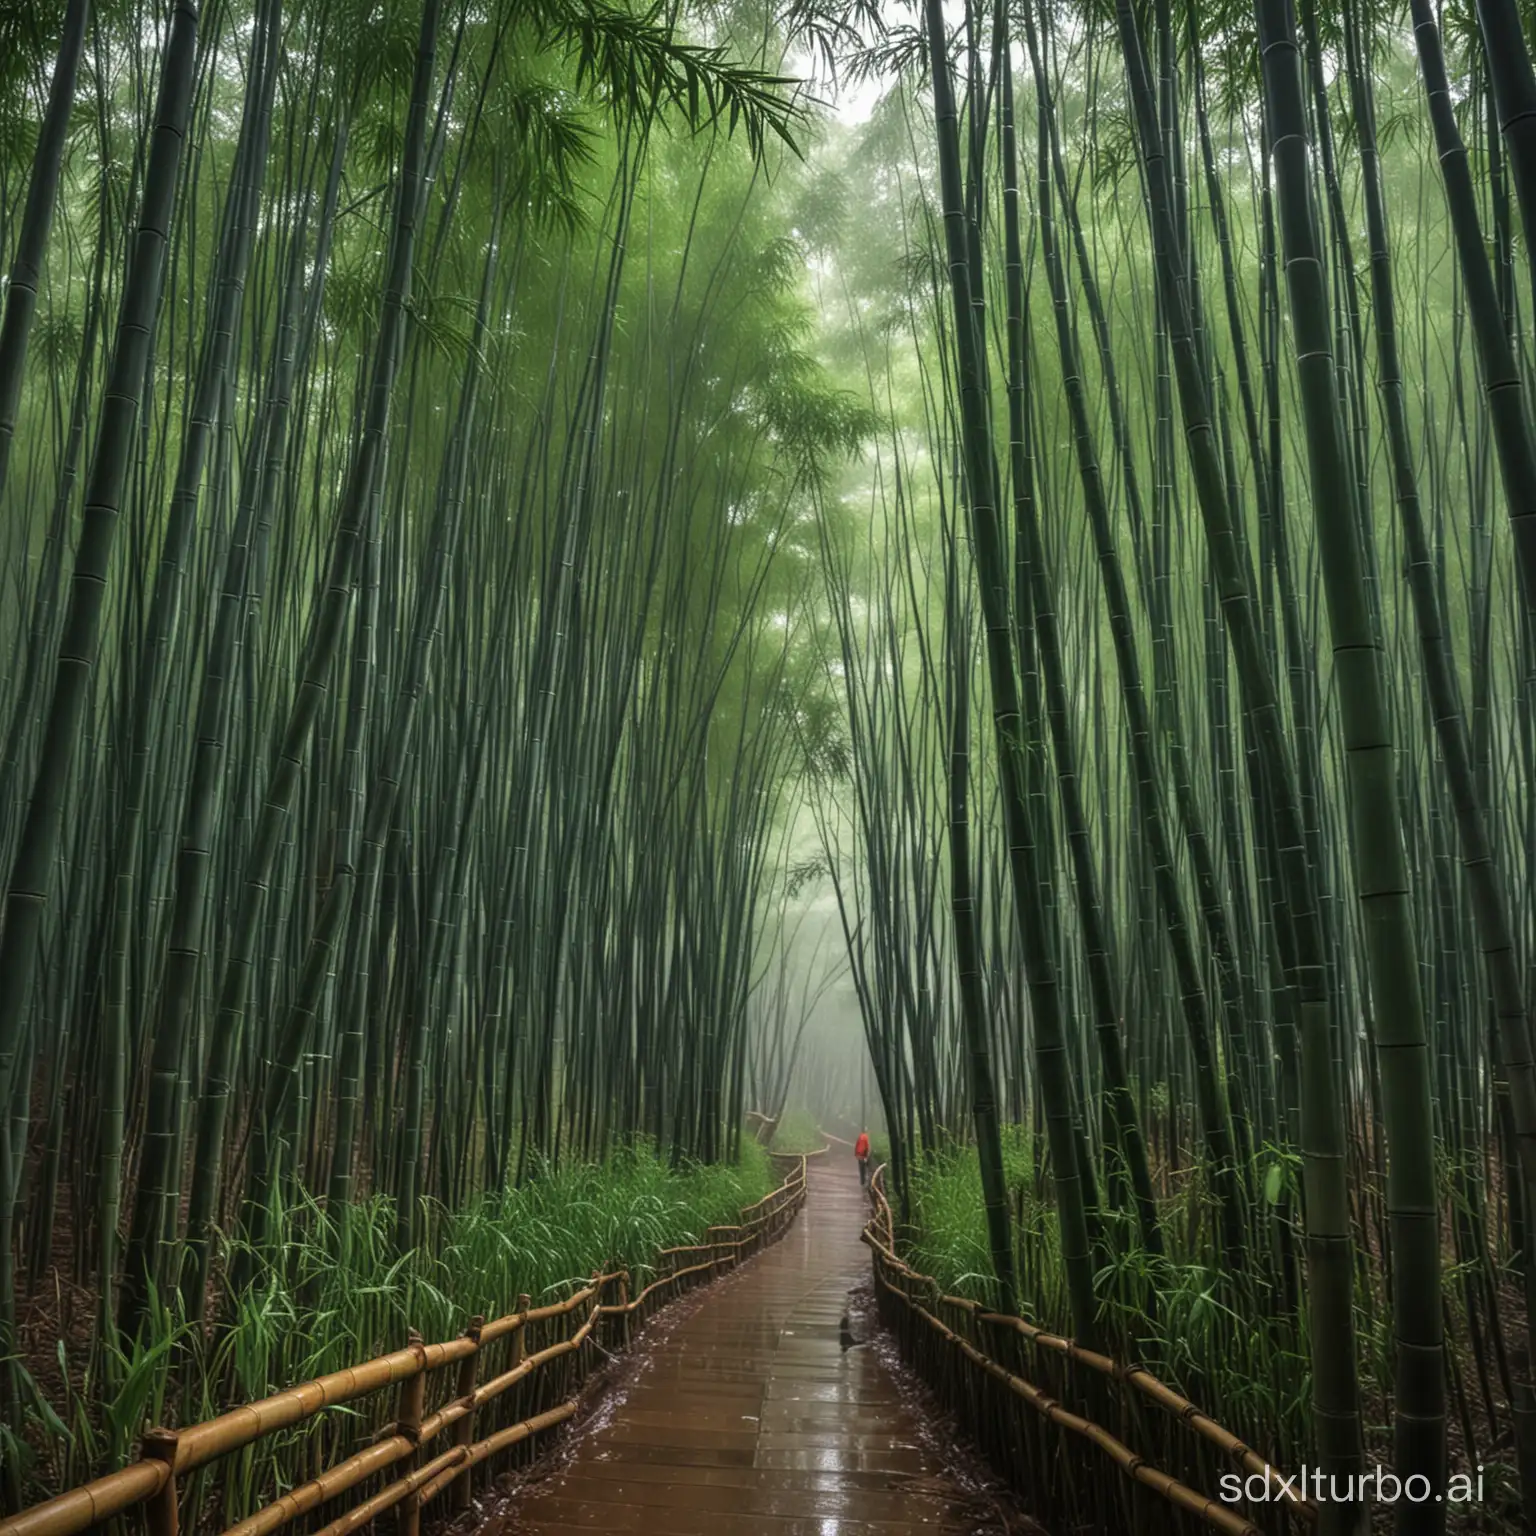 Bamboo grove in the rain